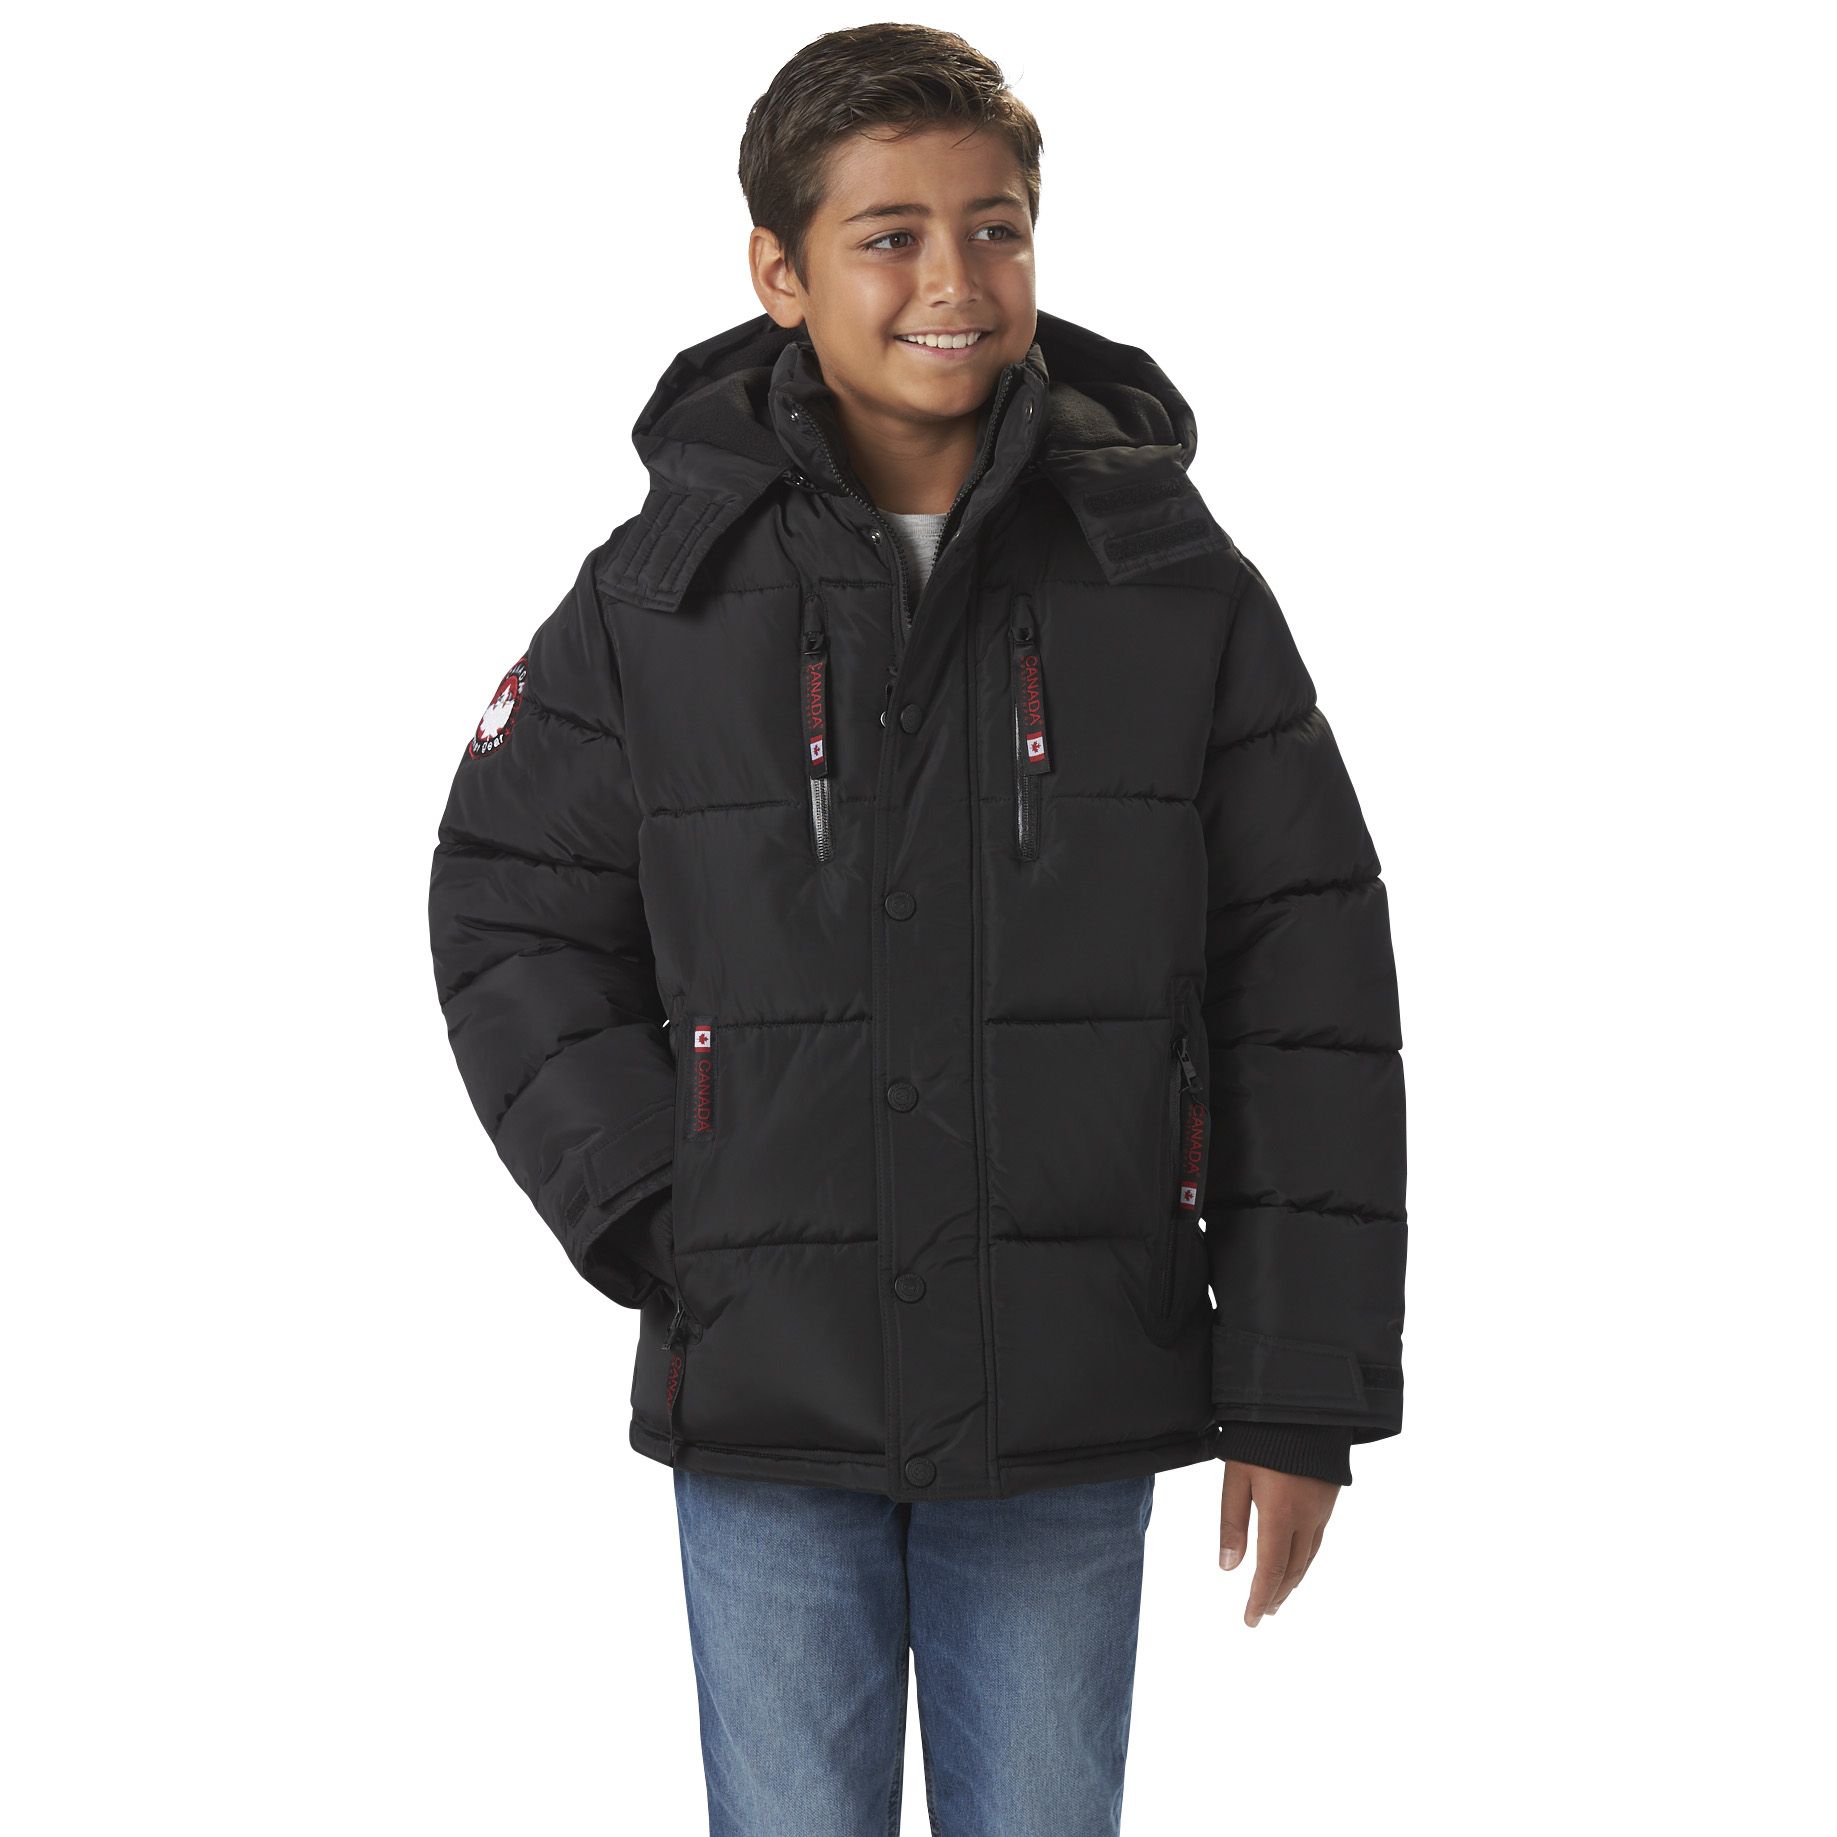 Fingerhut - Canada Weather Gear Boys' 8-16 Hooded Puffer Jacket